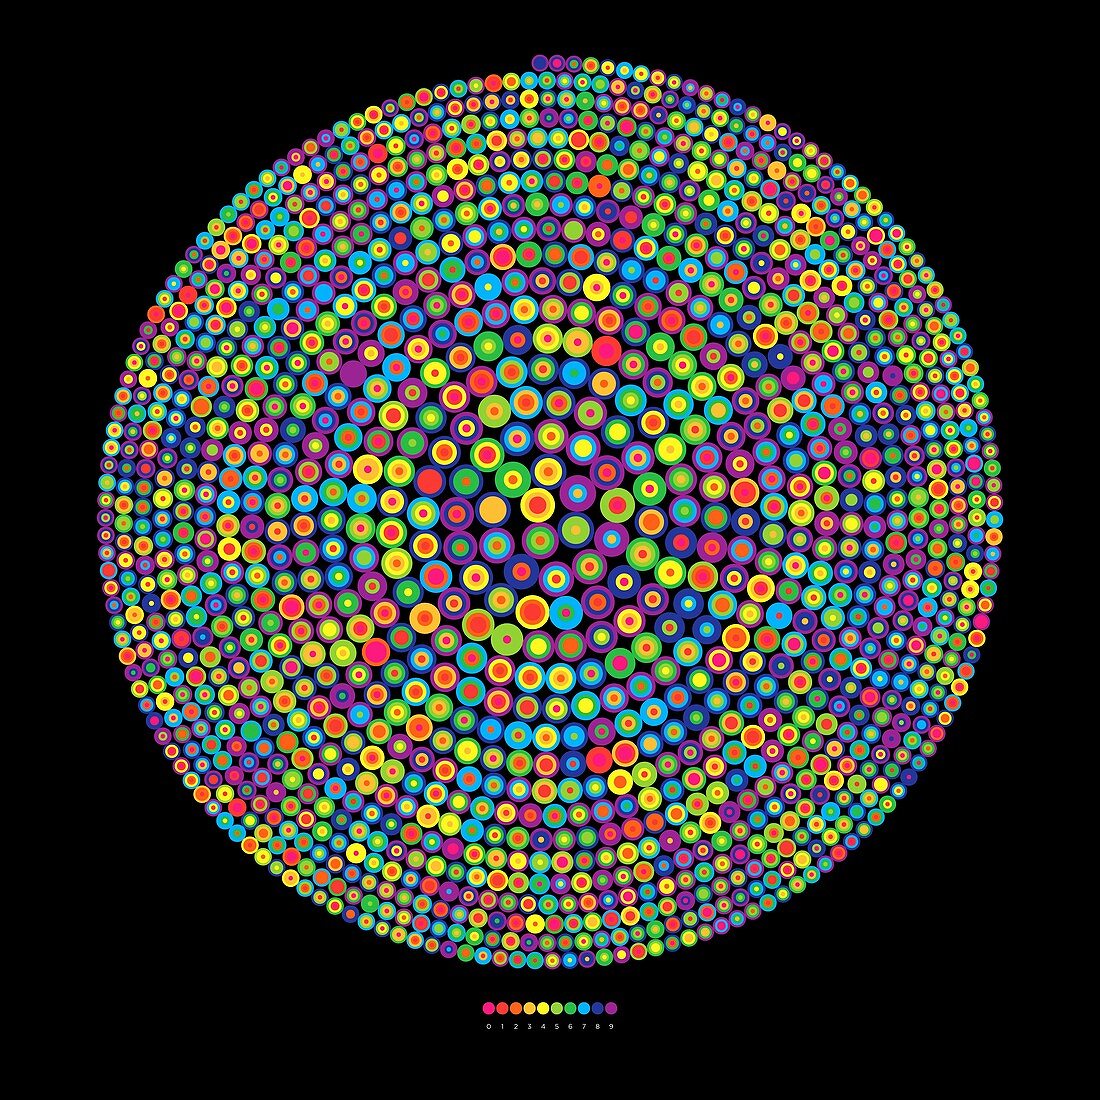 Pi frequency distribution representation, illustration